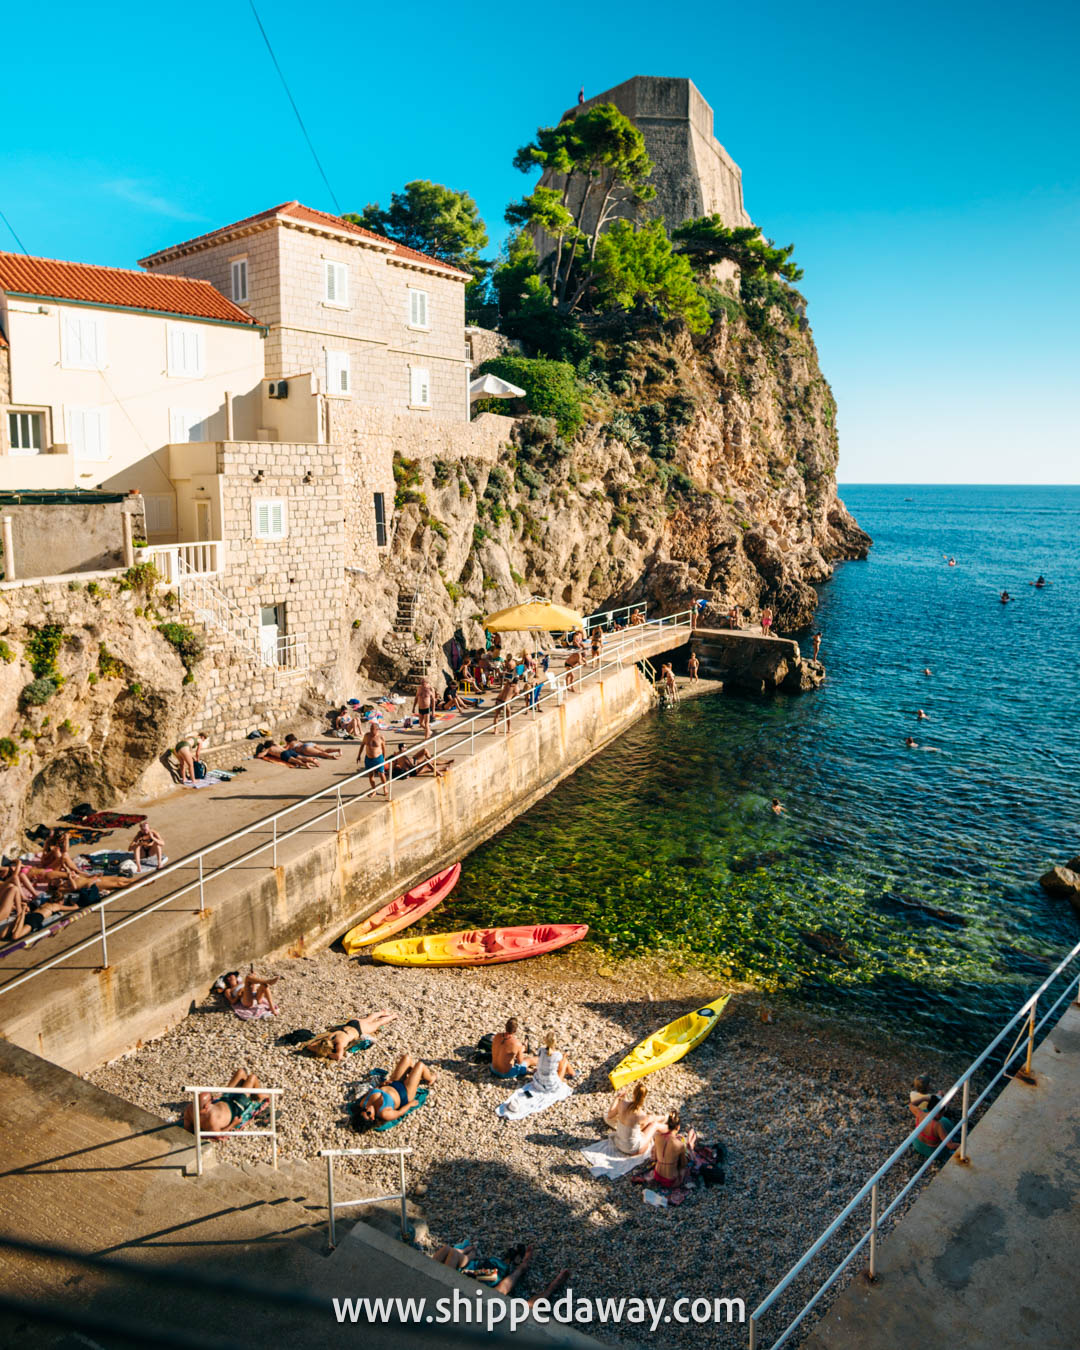 Best Dubrovnik Beaches - Dubrovnik Beaches - Best Beaches in Dubrovnik - Dubrovnik Beaches Guide - Best Beaches in Dubrovnik as recommended by a local - Sulic Beach